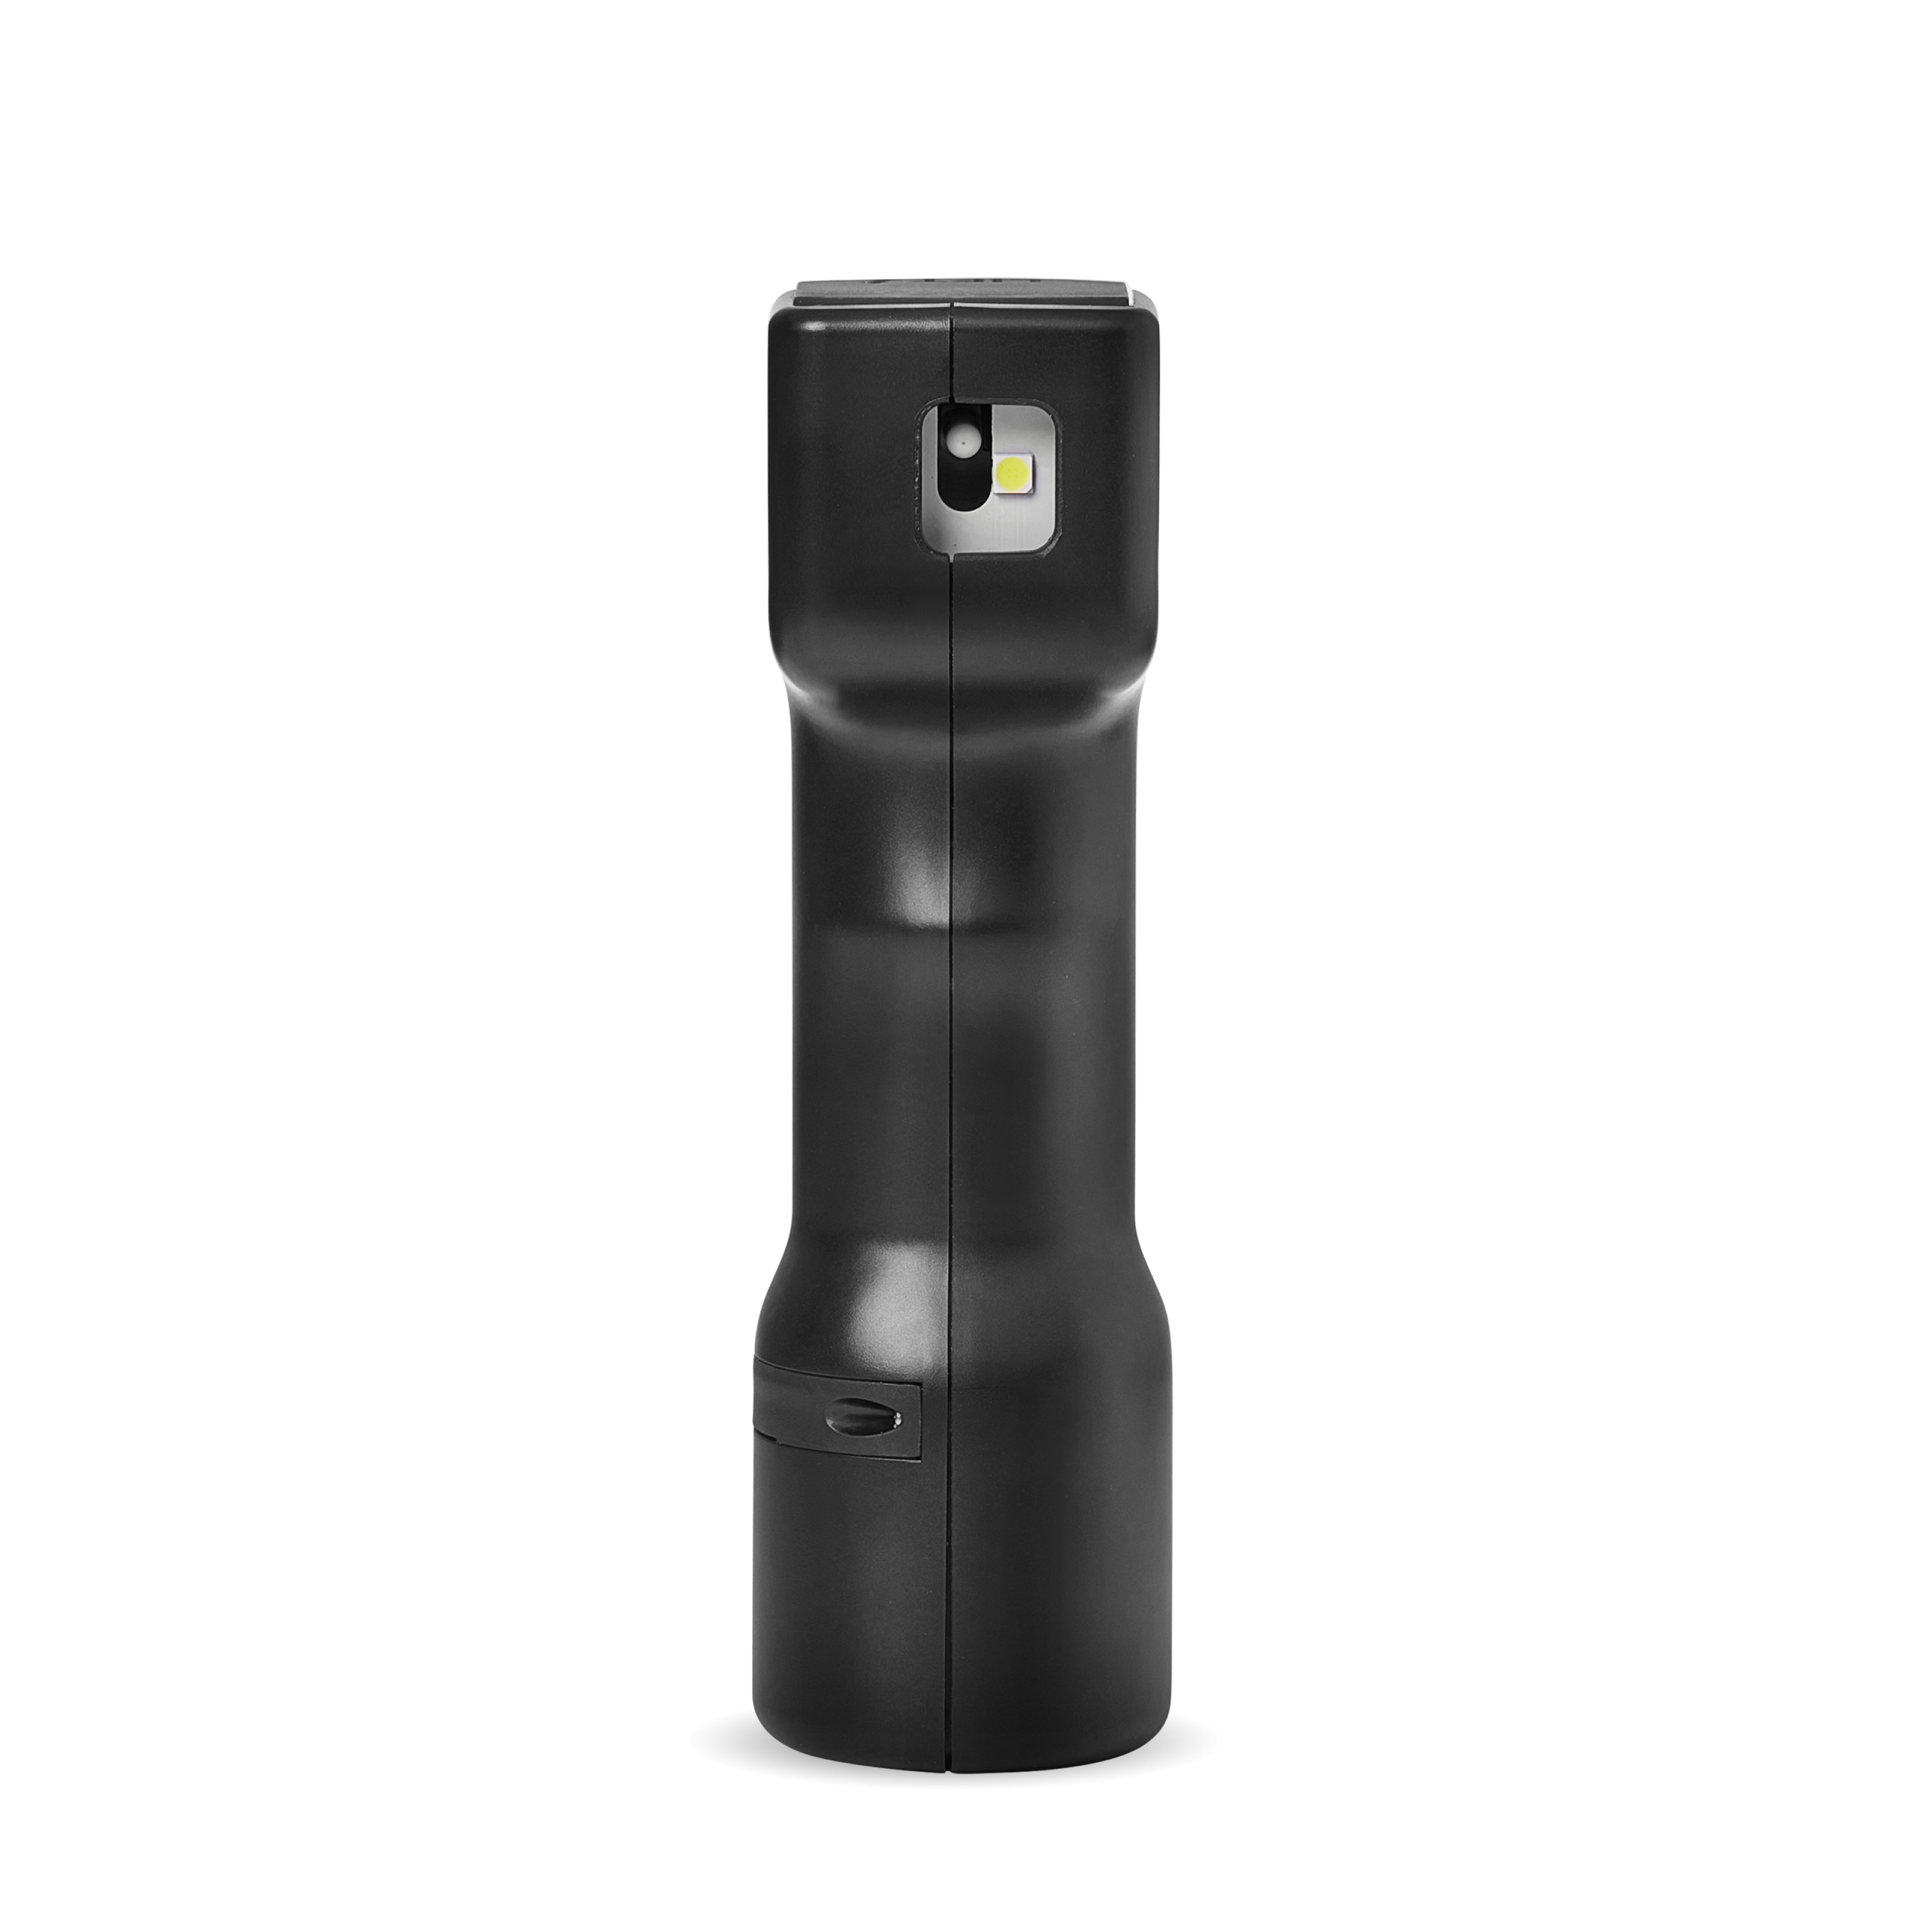 Plegium Smart Pepper Spray 5-in-1 – Plegium - Smart Personal Safety